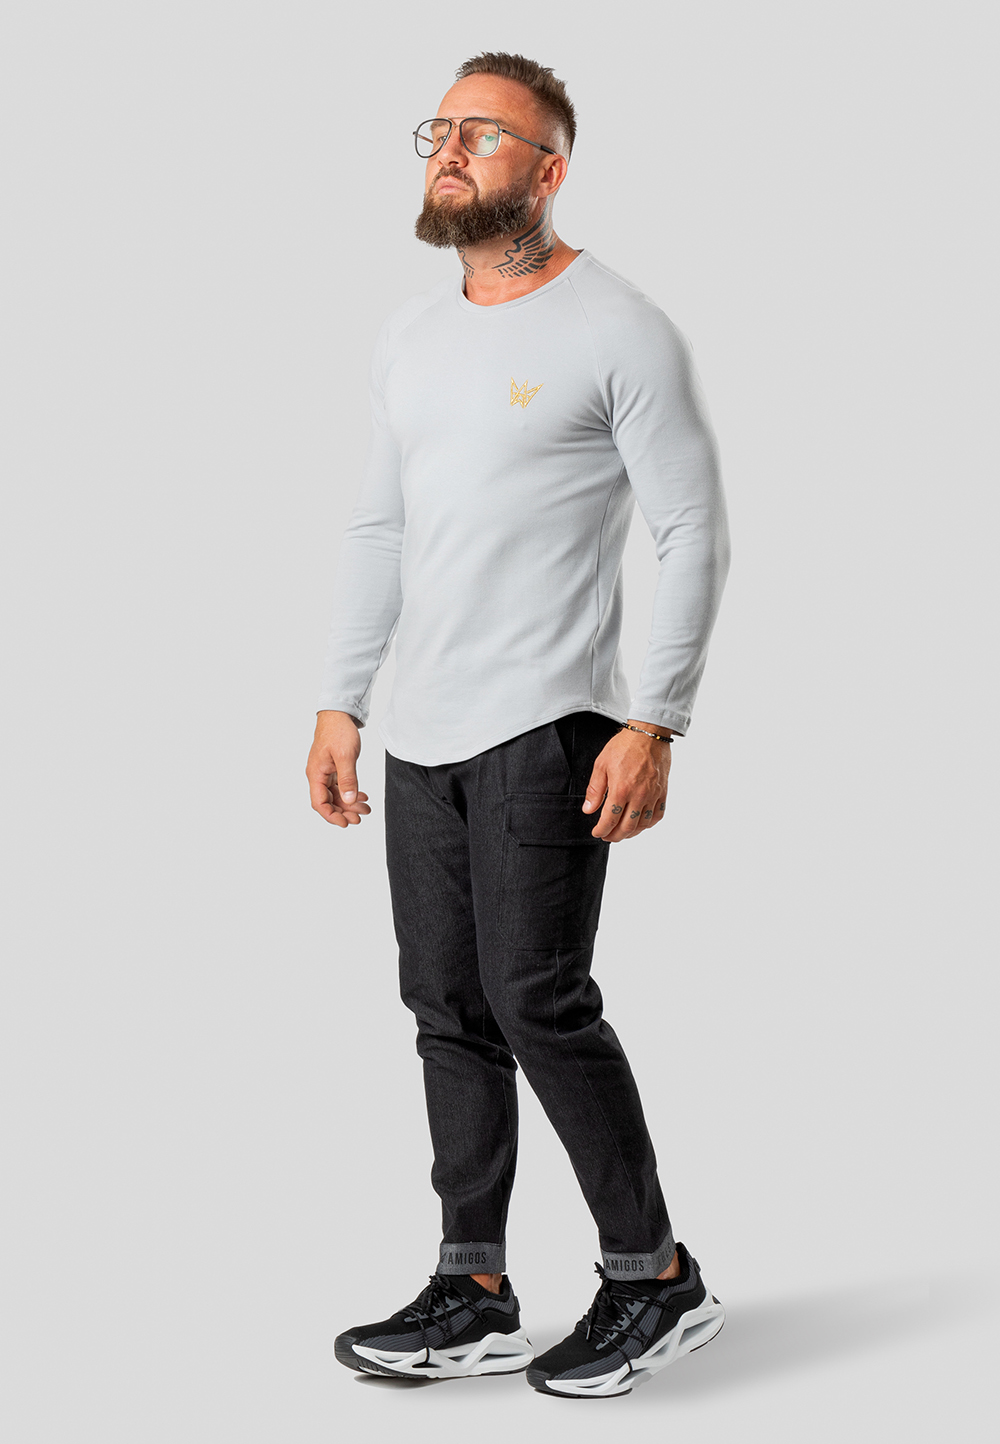 TRES AMIGOS WEAR Man's Sweatshirt G007-BLR